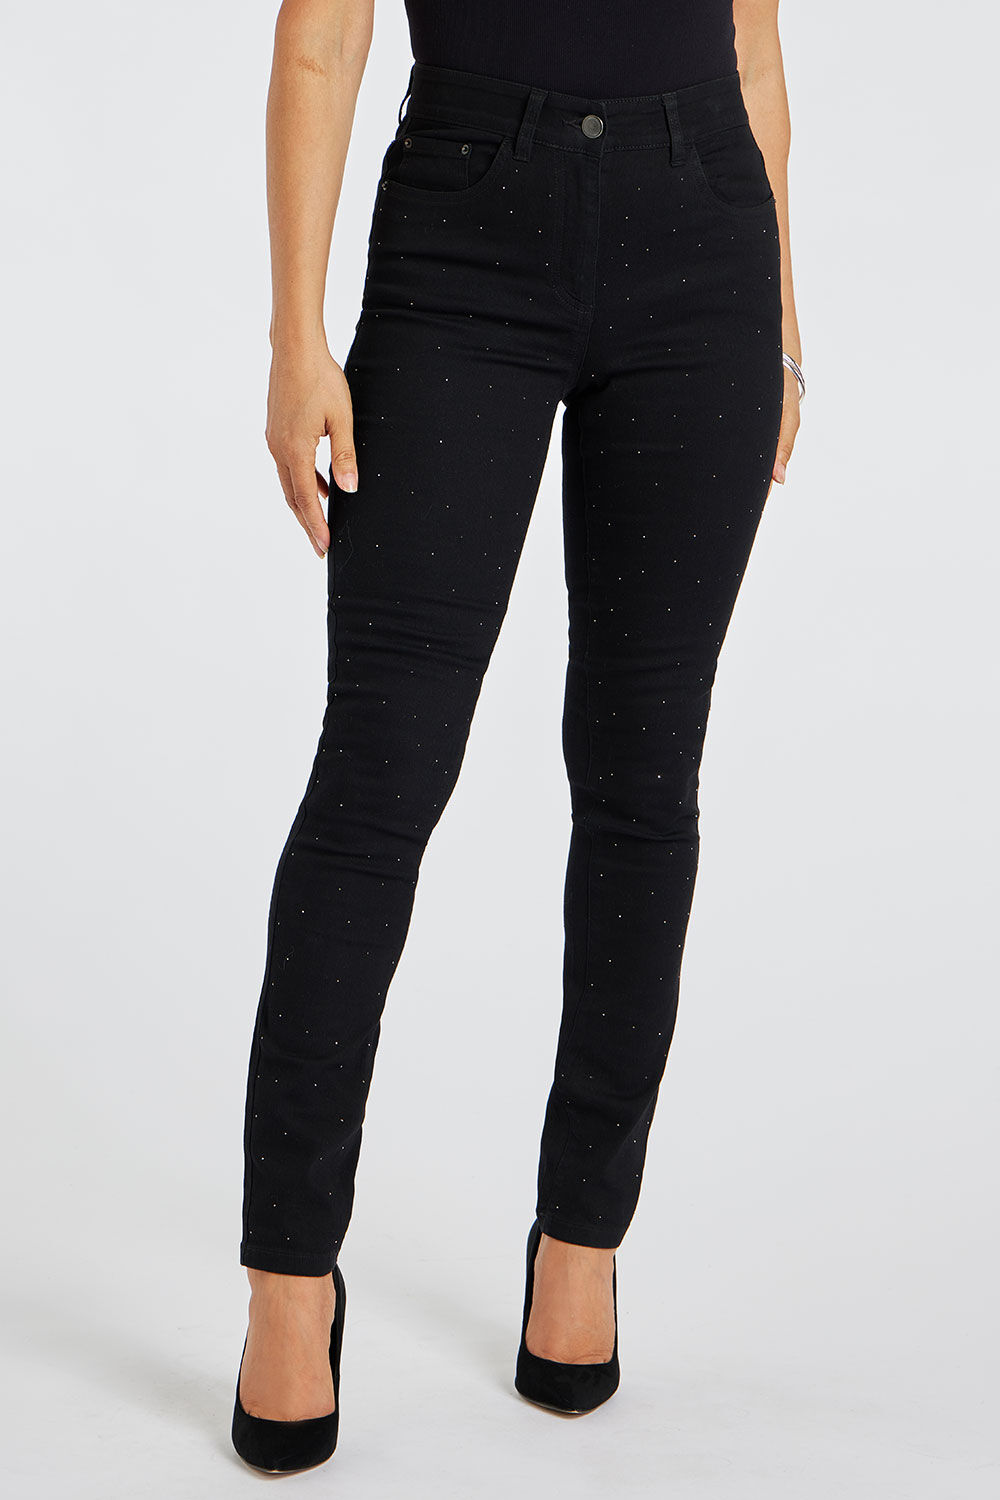 Bonmarche Black The Susie Embellished Front Slim Leg Jeans, Size: 14